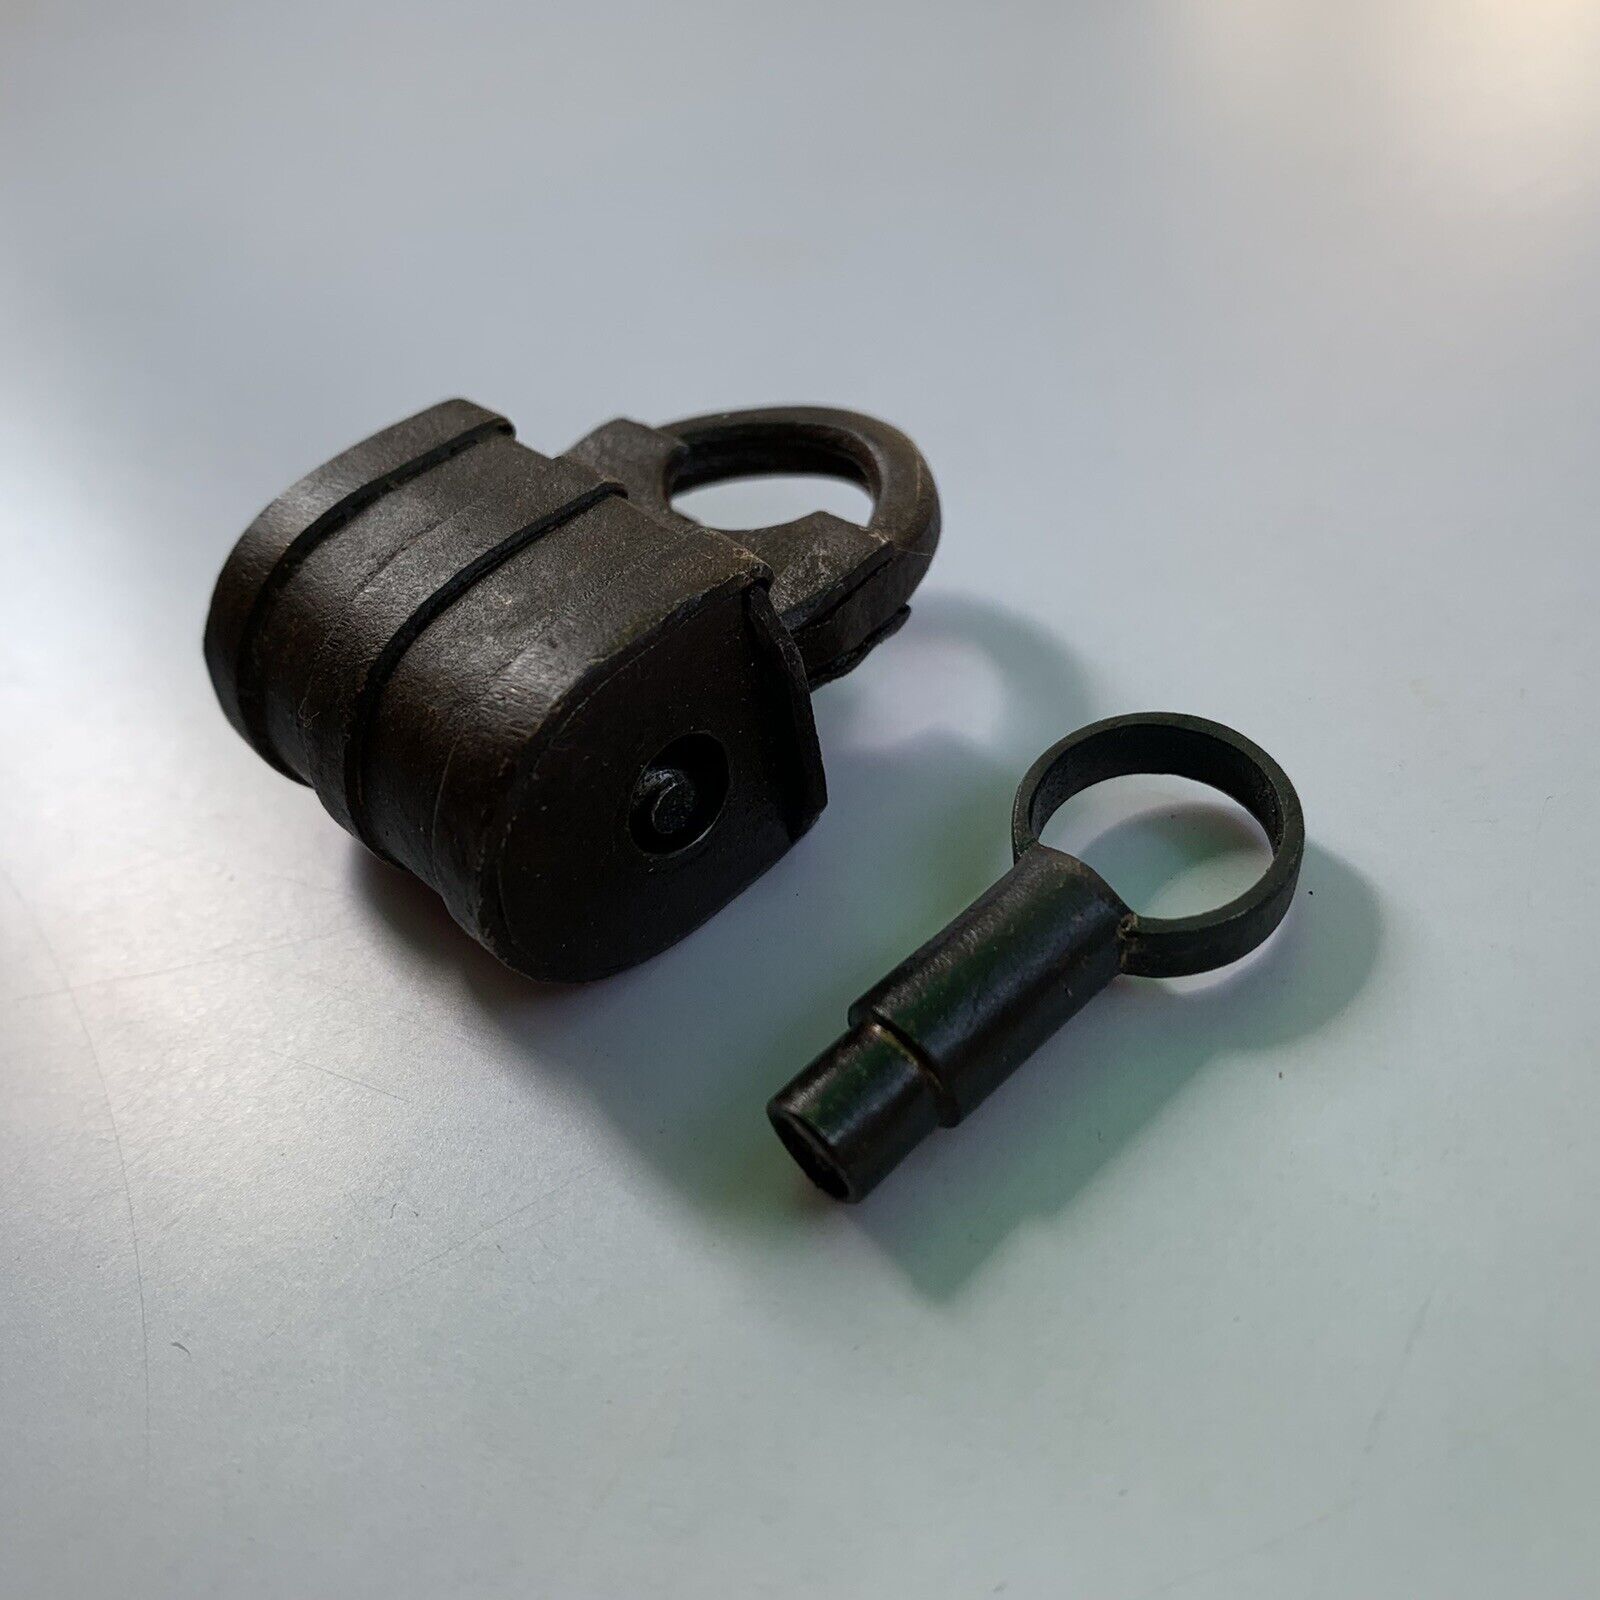 1850\'s Iron padlock or lock with SCREW TYPE nice decorative shape, small sized.